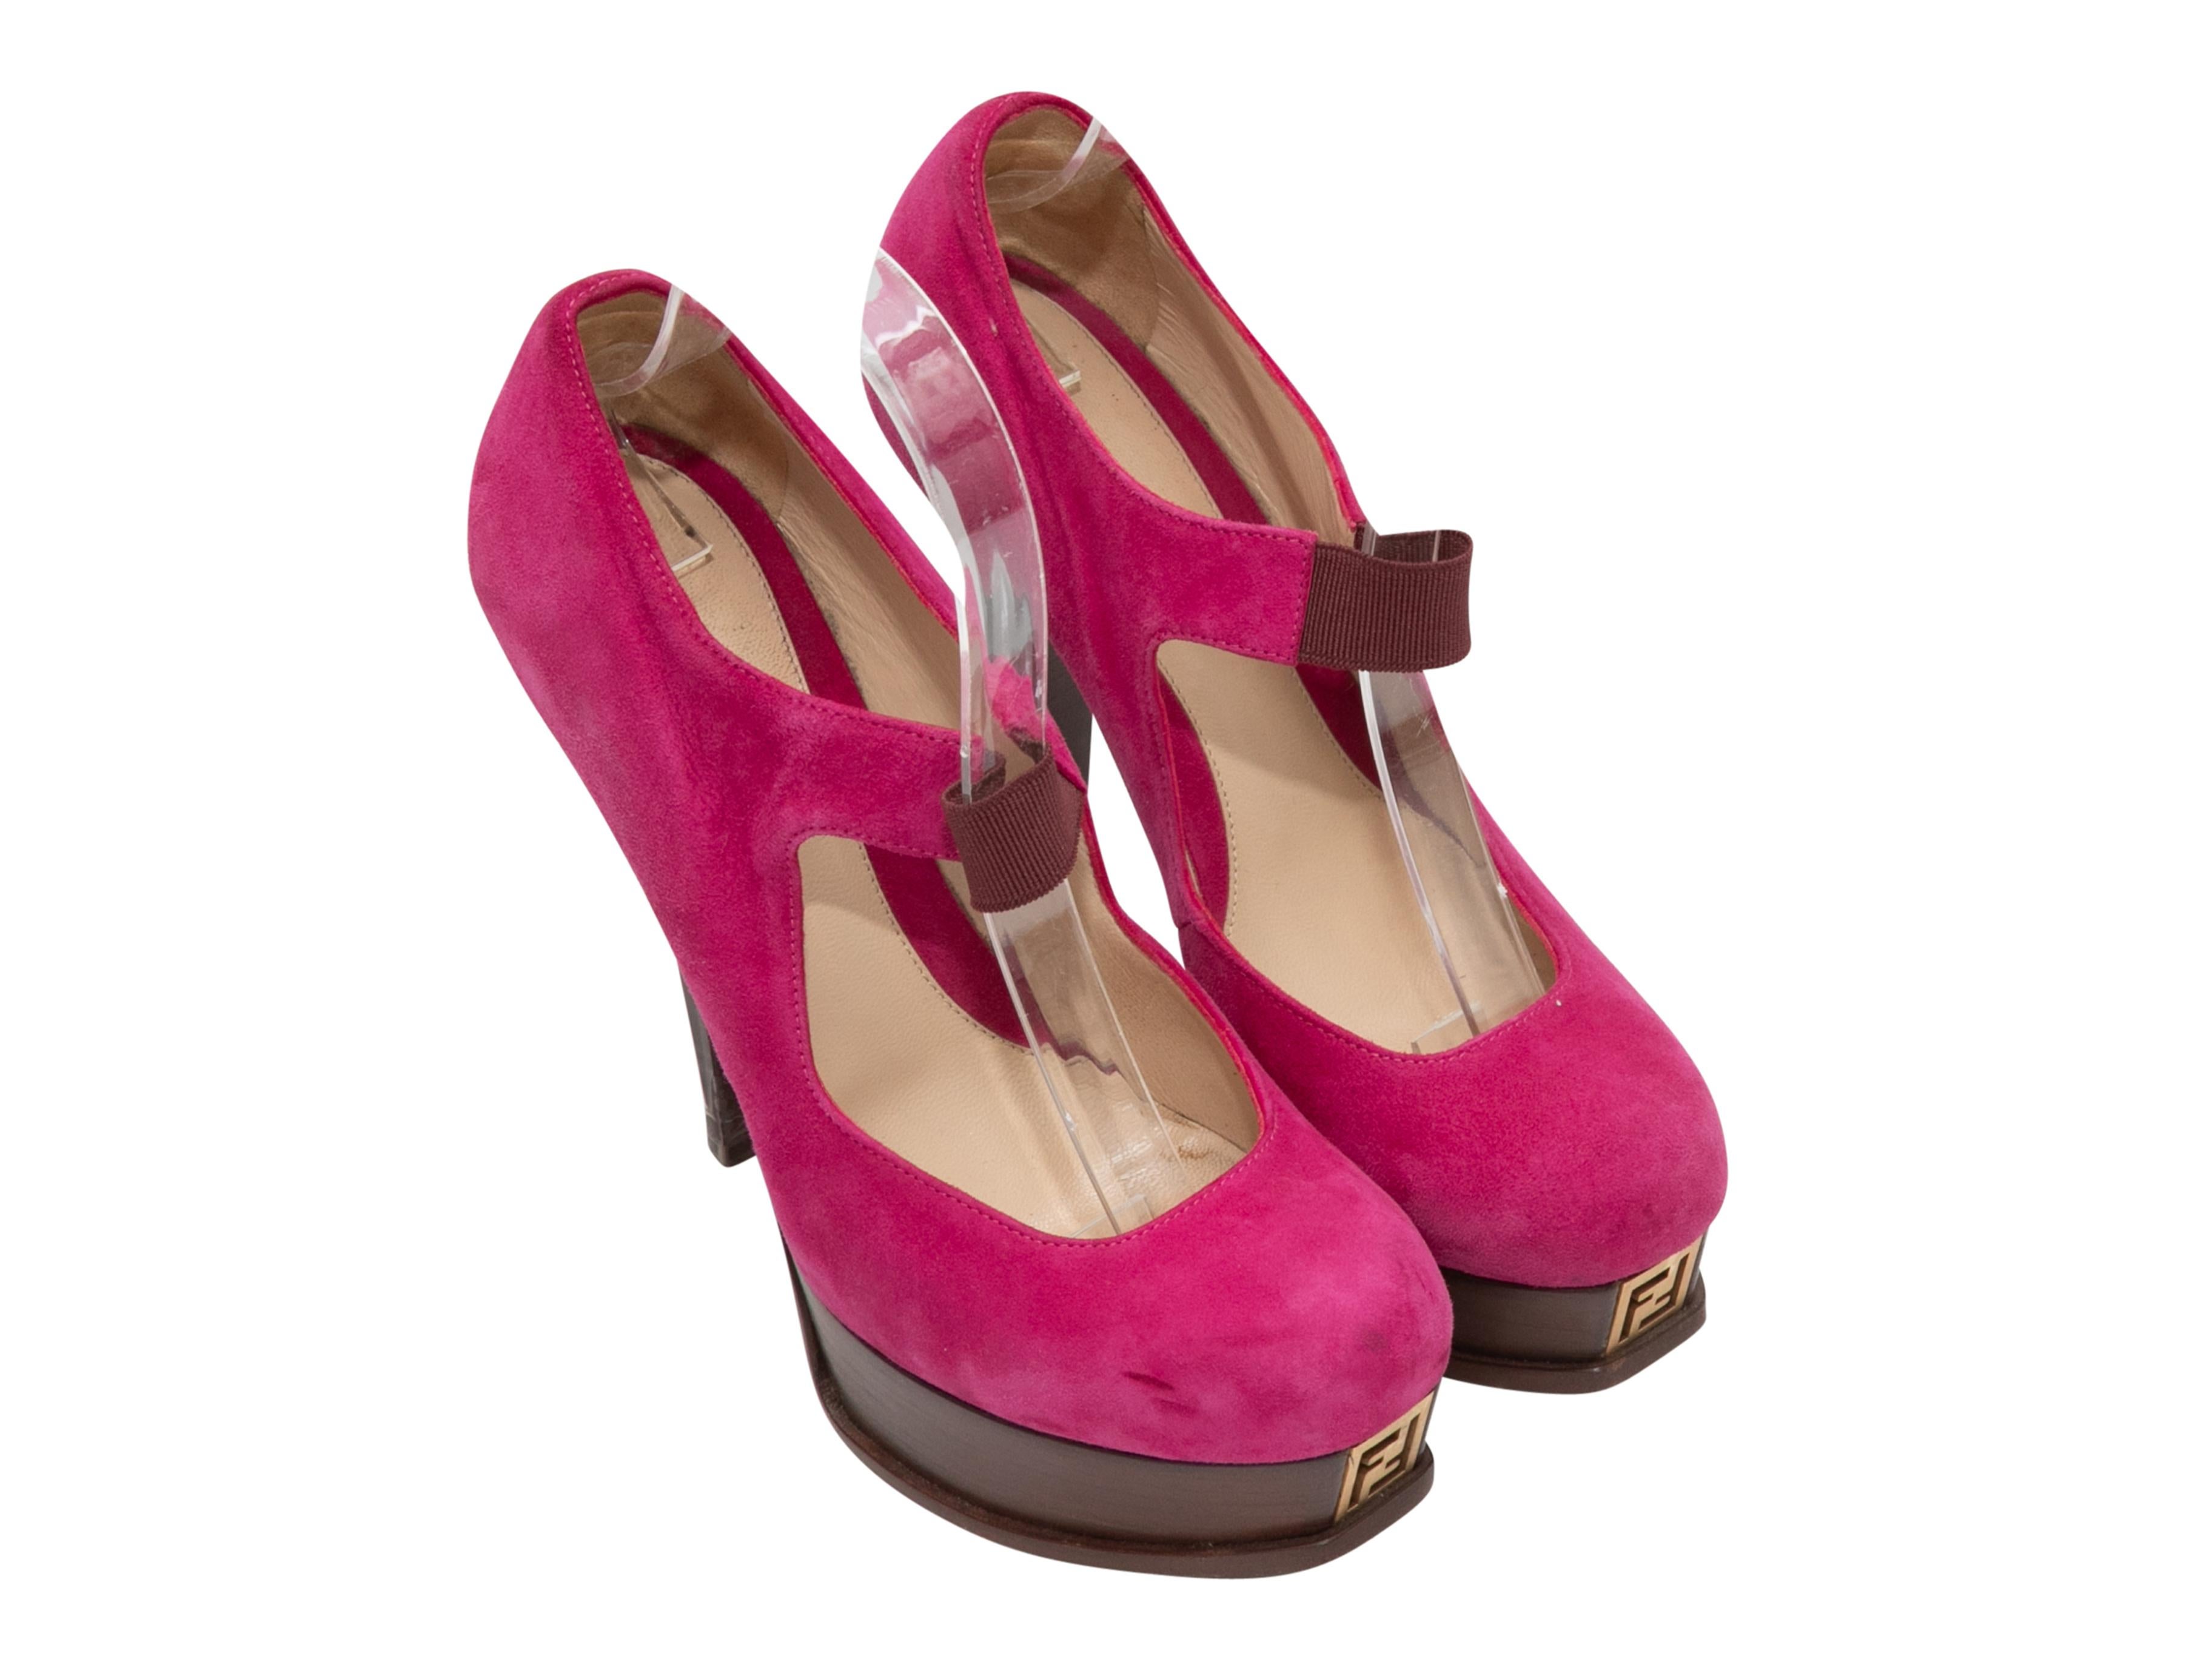 Fuchsia suede Mary Jane platform pumps by Fendi. Stacked heels. 1.5